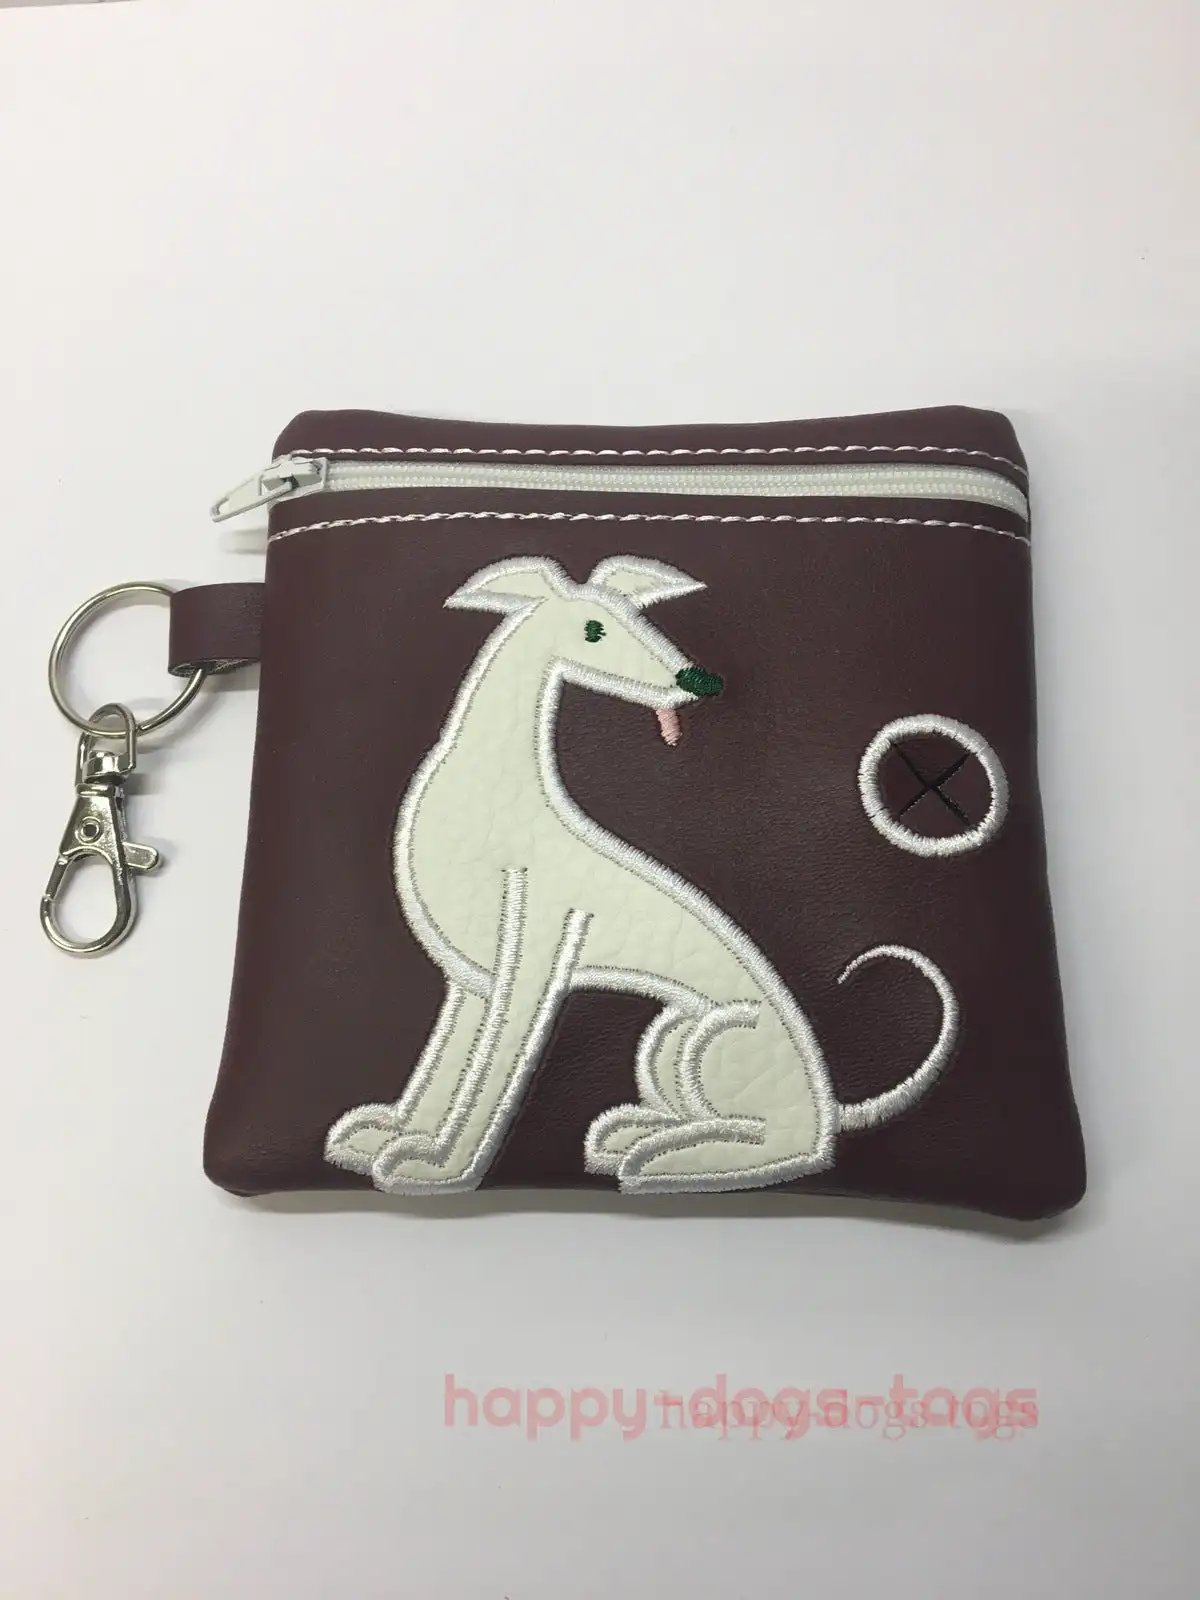 Embroidered Lurcher / Greyhound poo bag dispenser